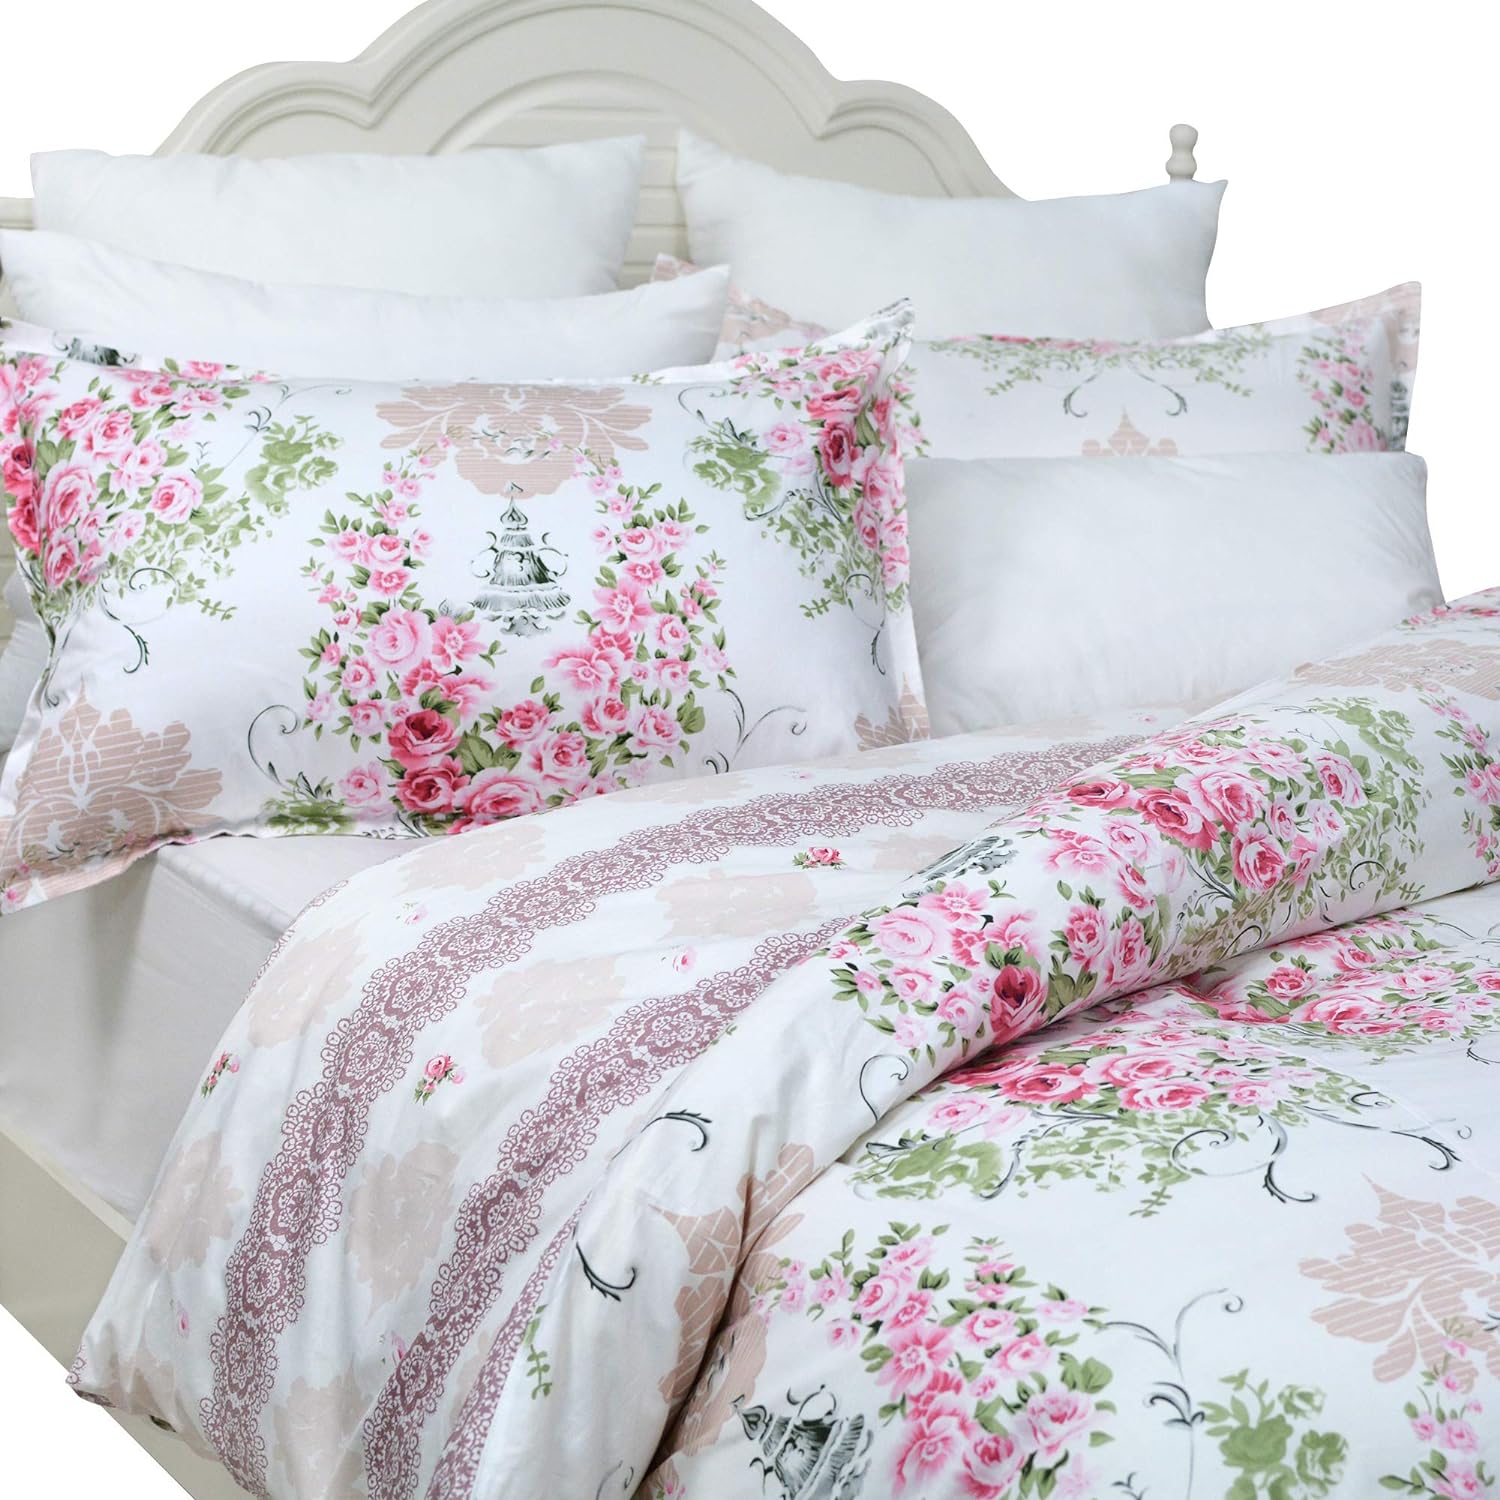 FADFAY Pink Rose Floral Duvet Cover Set 100% Cotton Girls Bedding with Hidden Zipper Closure 3 Pieces, 1duvet Cover & 2pillowcases,Queen Size